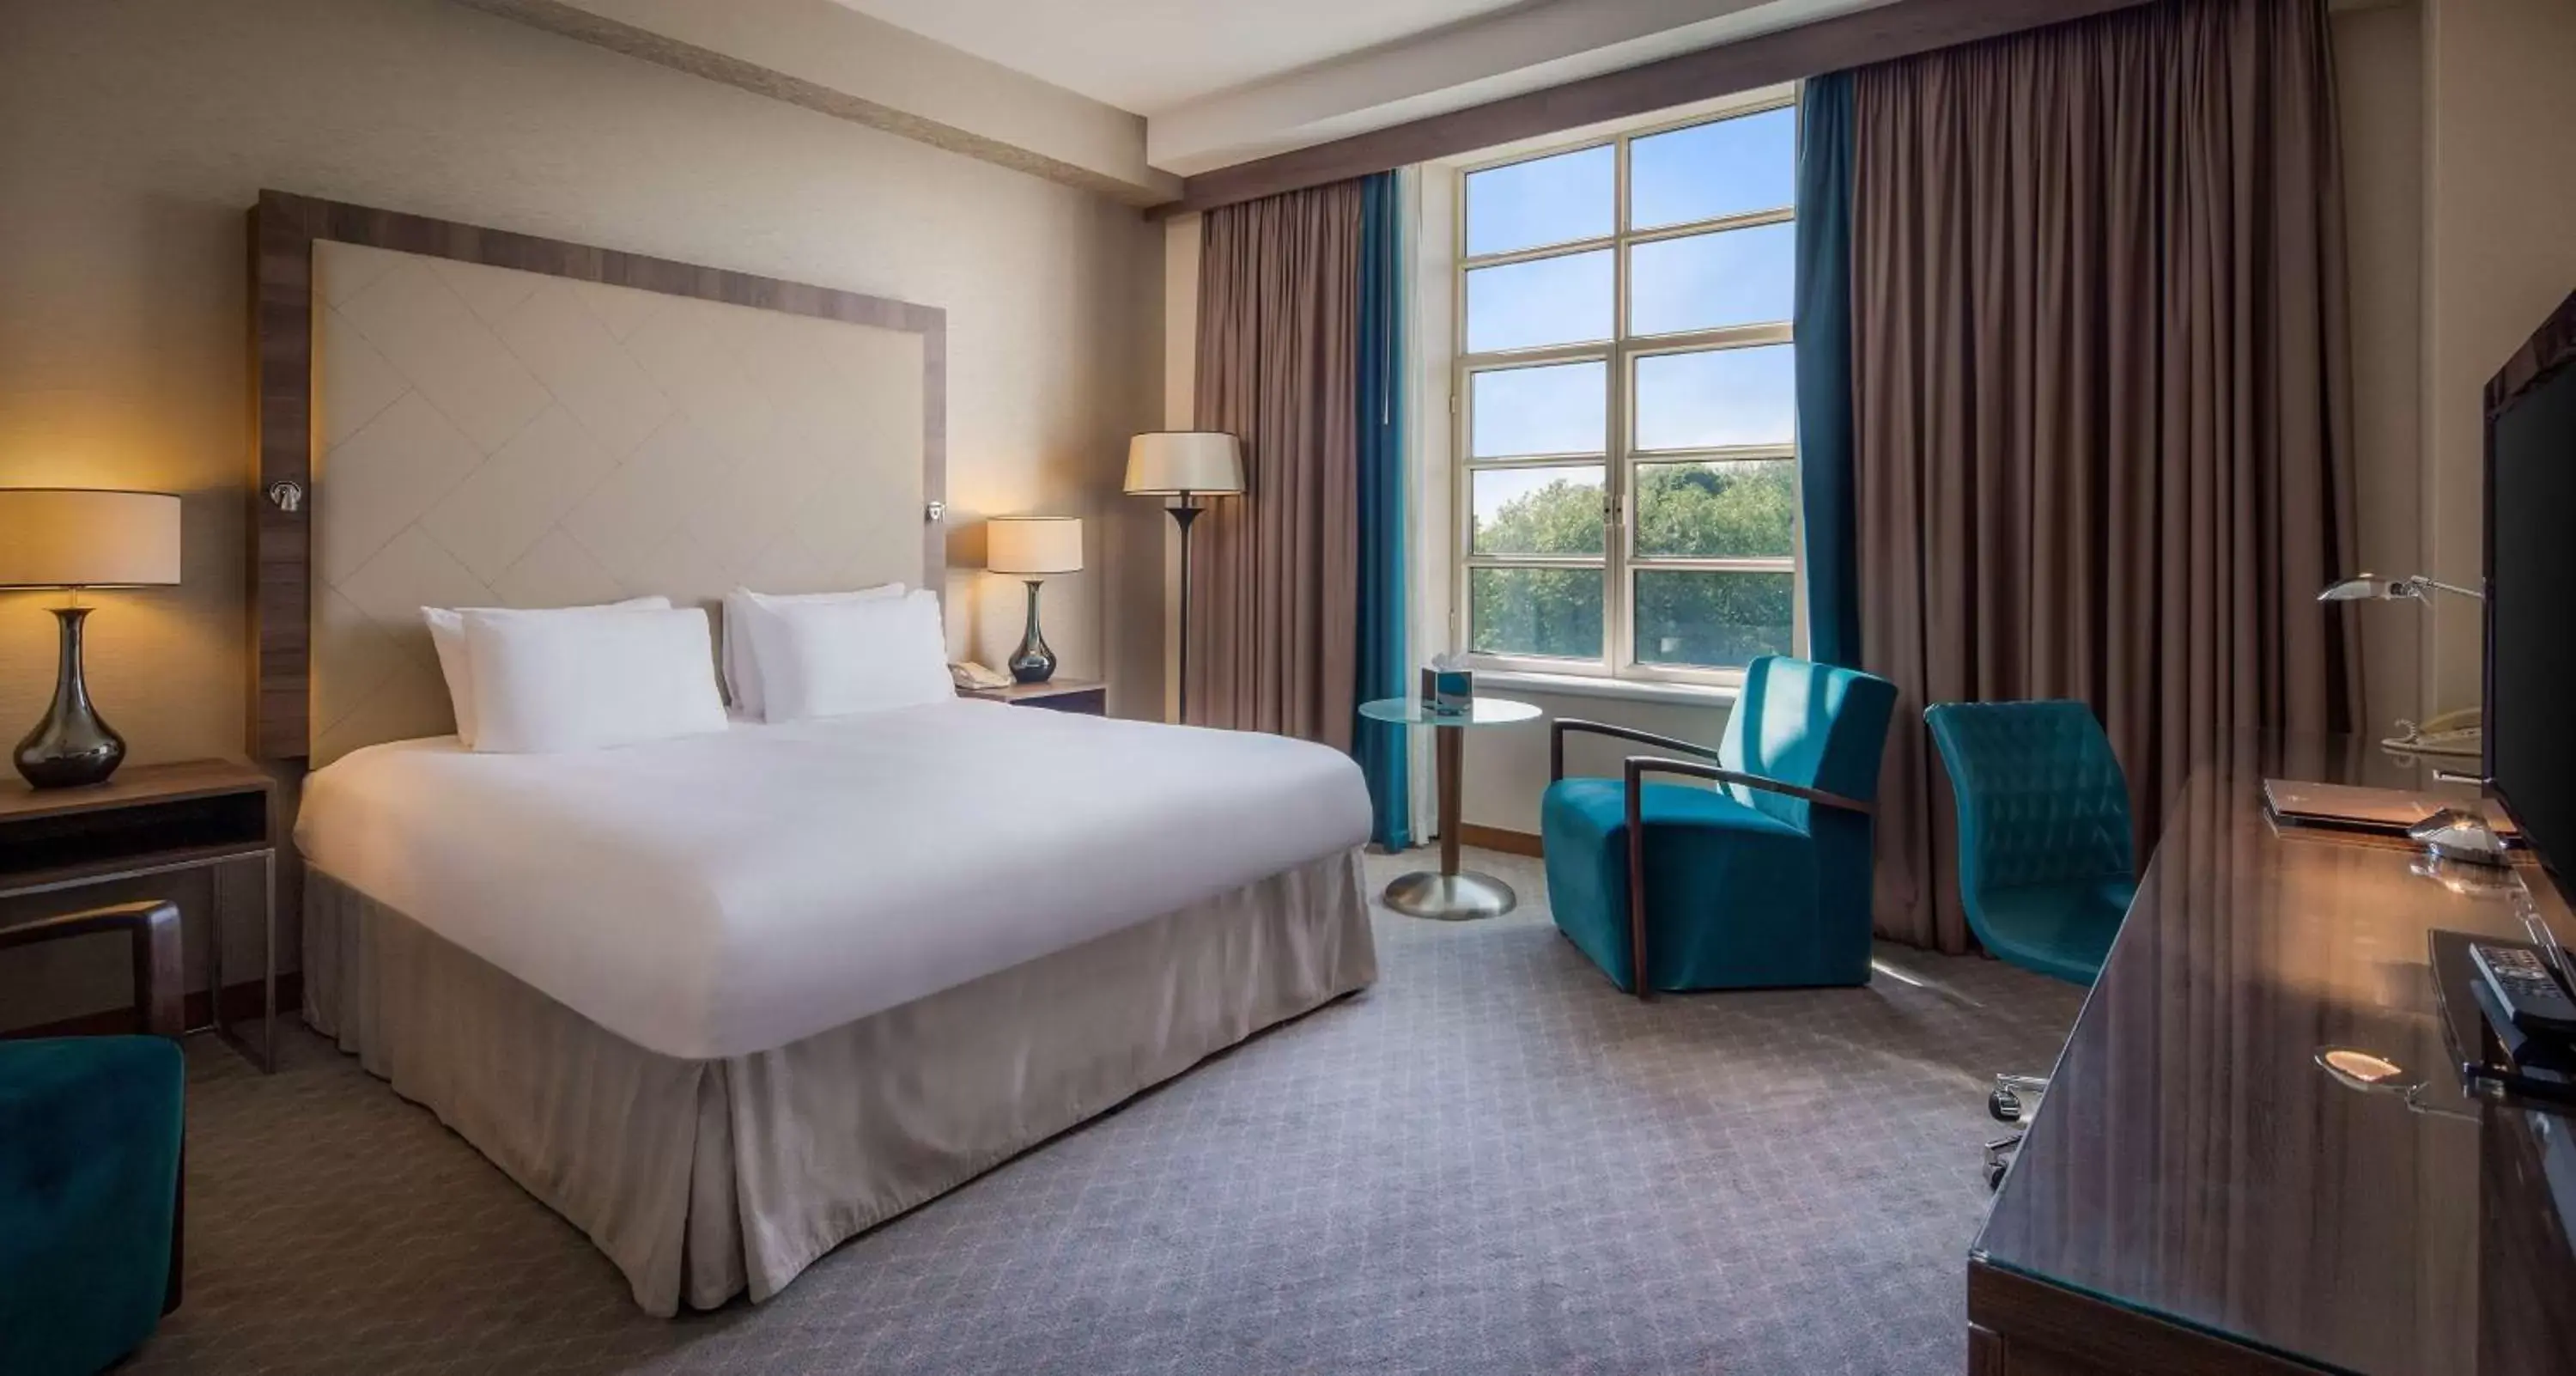 Bedroom in Hilton Cardiff